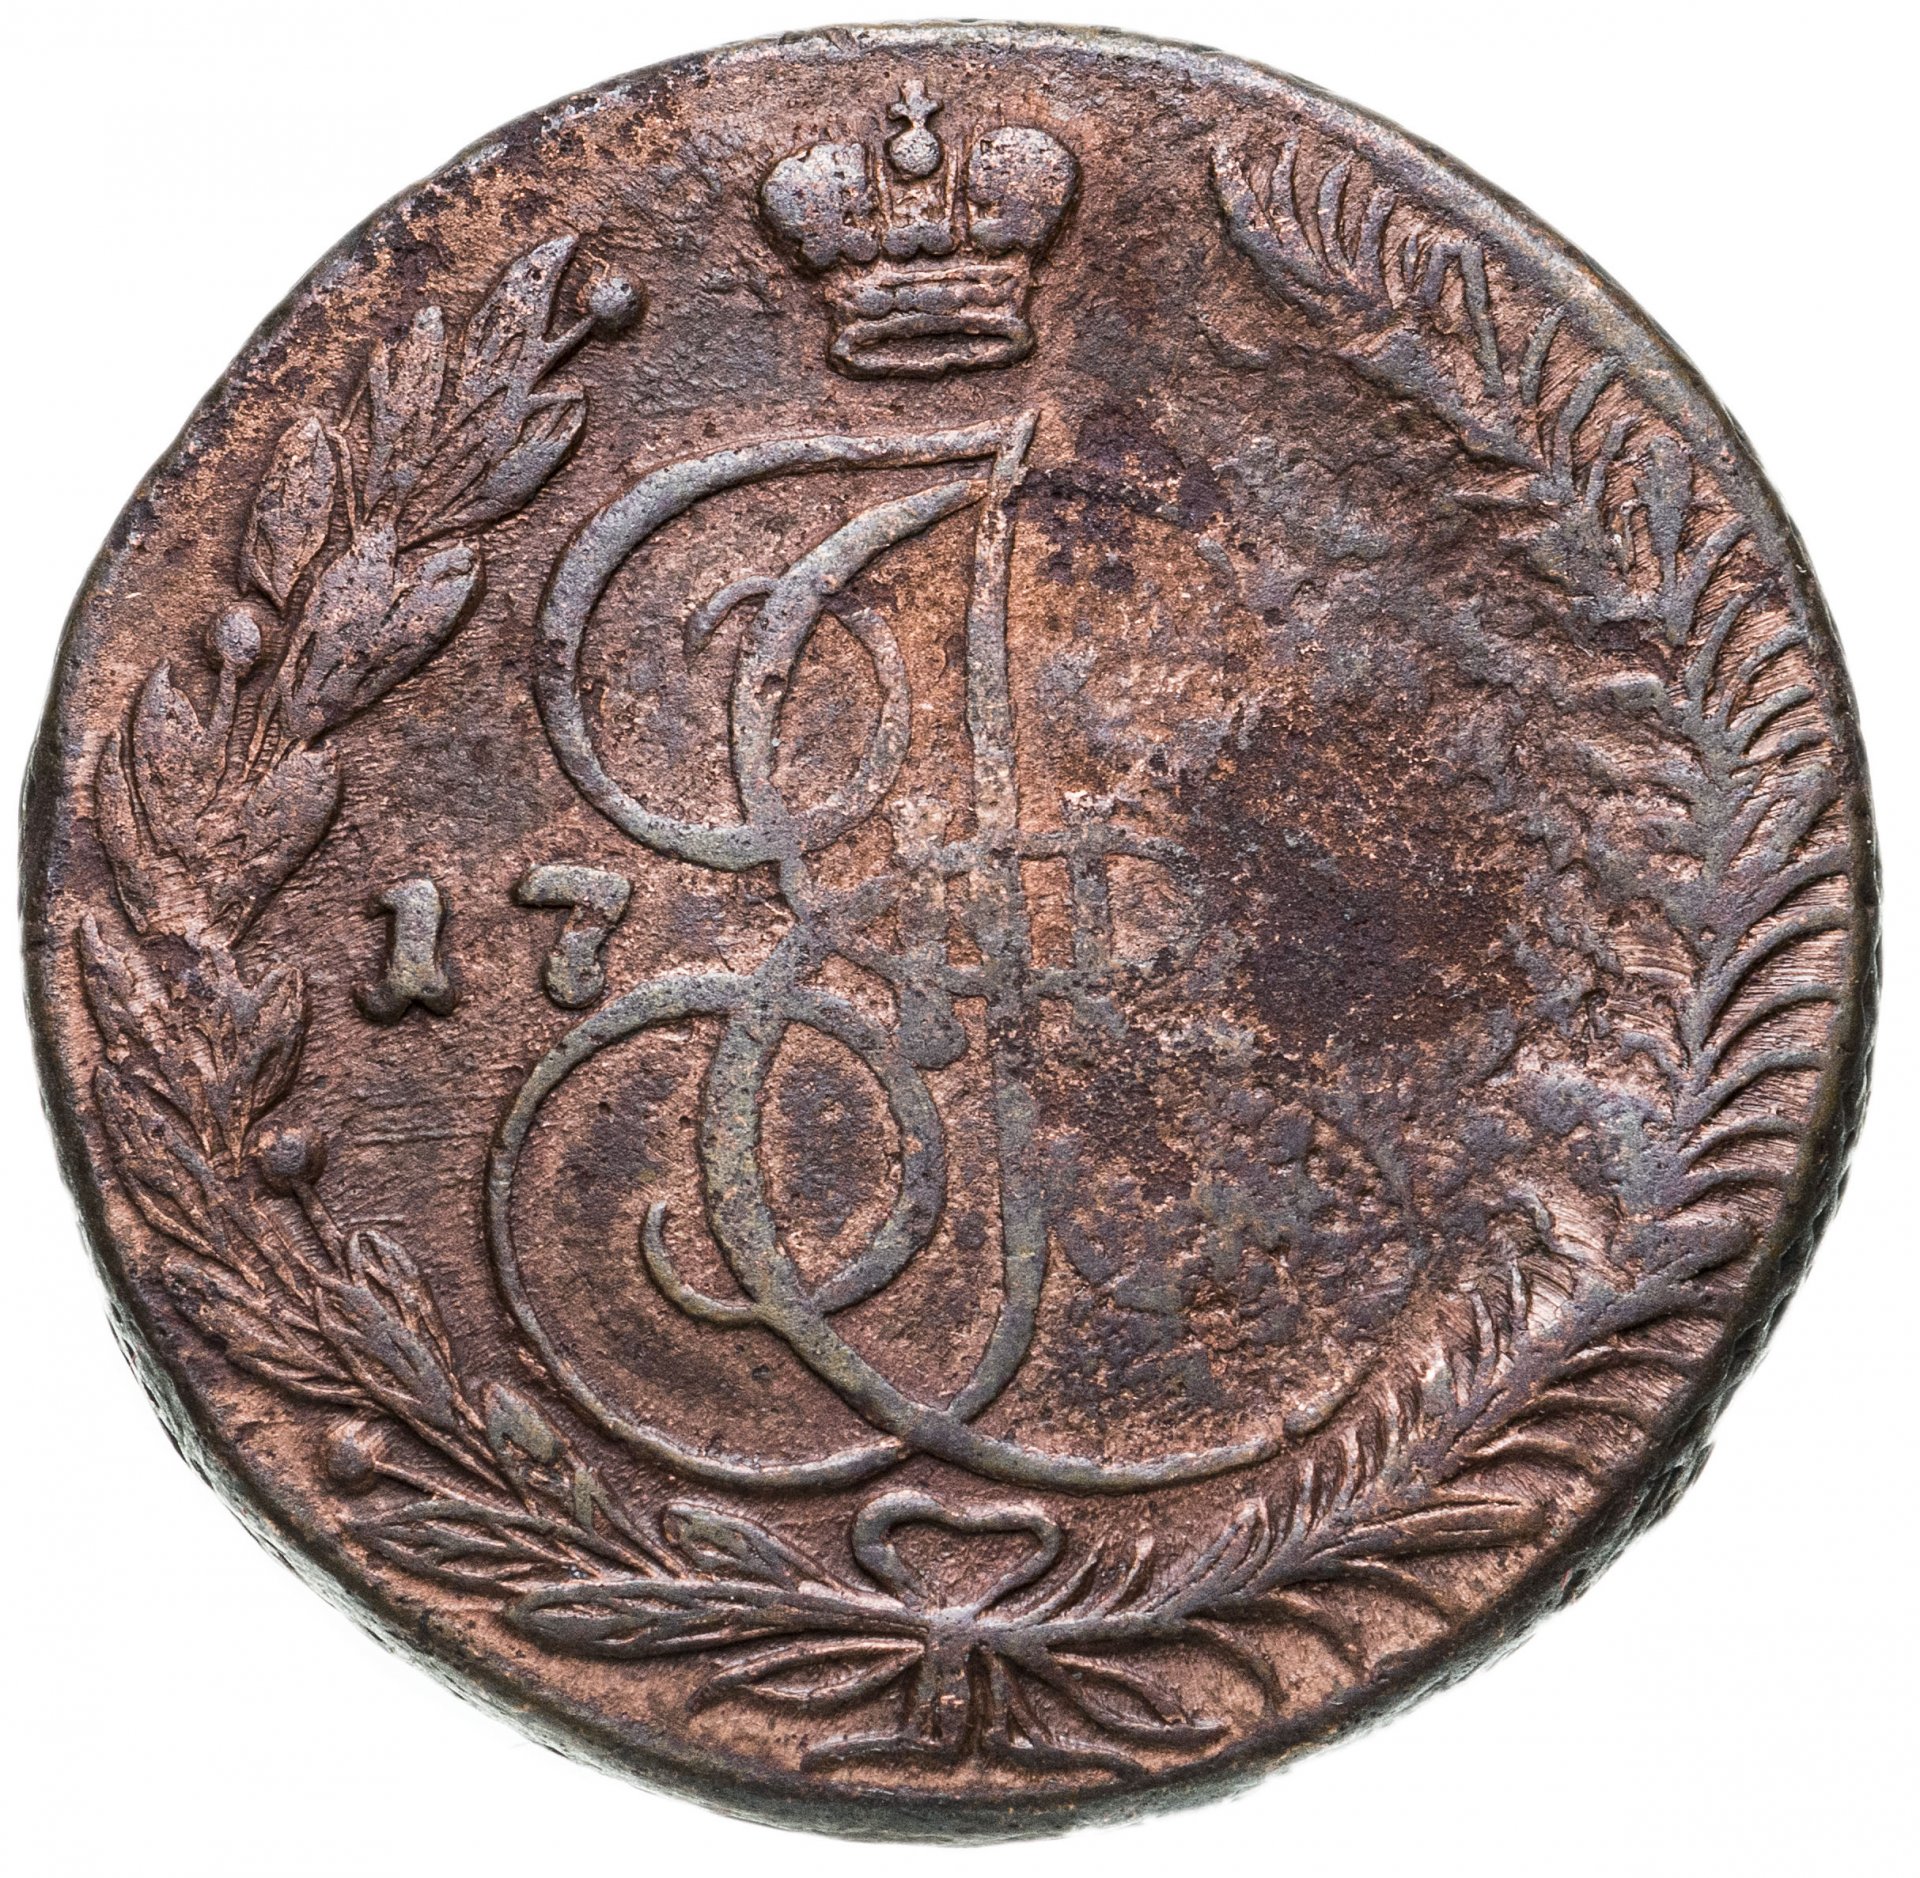 5 Копеек 1780. Монета 1788. Монеты 1780 года. Царский коп